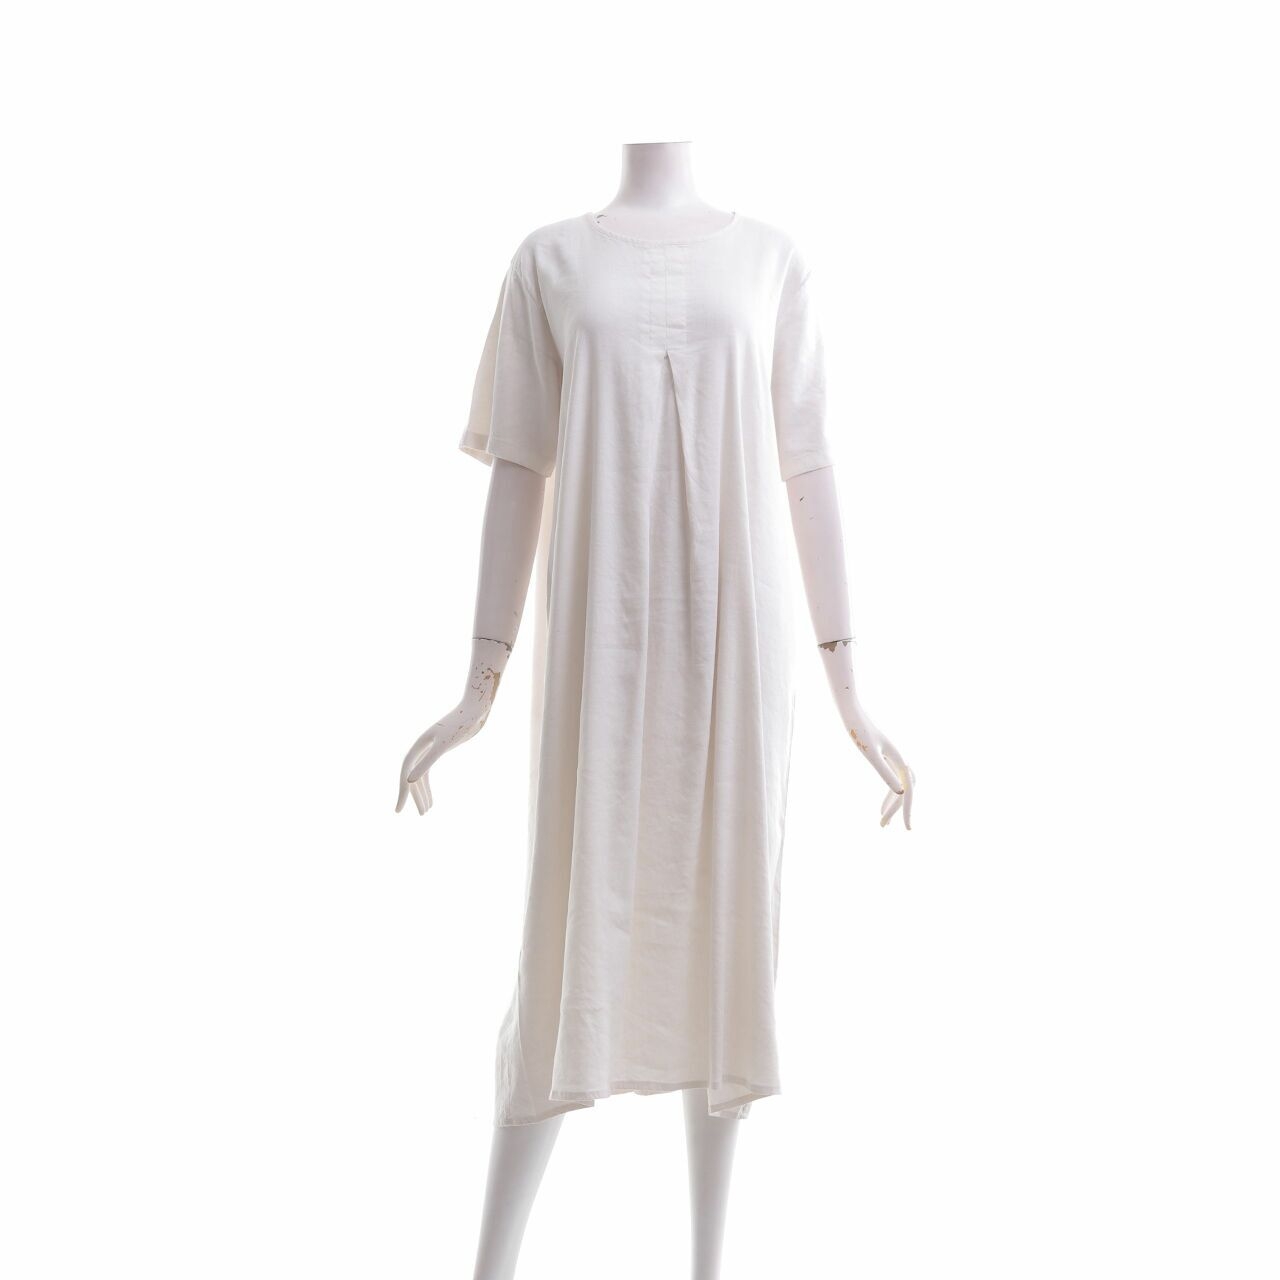 KYVA Off White Long Dress